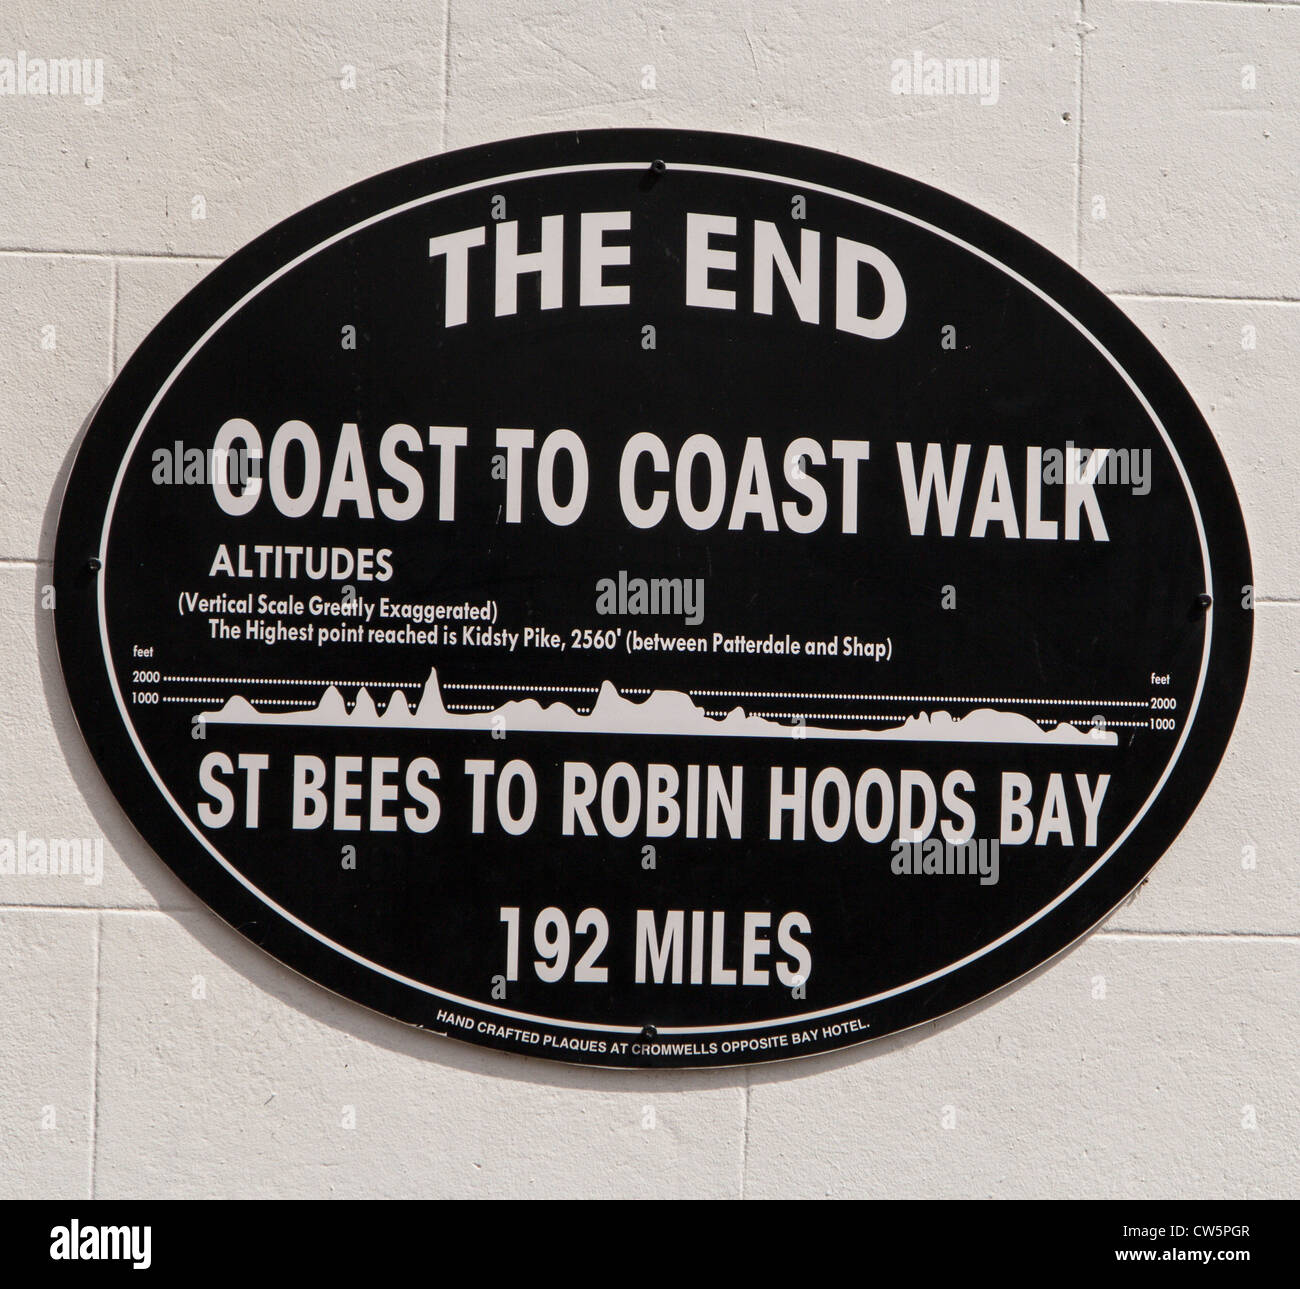 Robin Hoods Bay Yorkshire Gedenktafel an Bay Hotel Markierung Ende des Coast to Coast Walk. Stockfoto